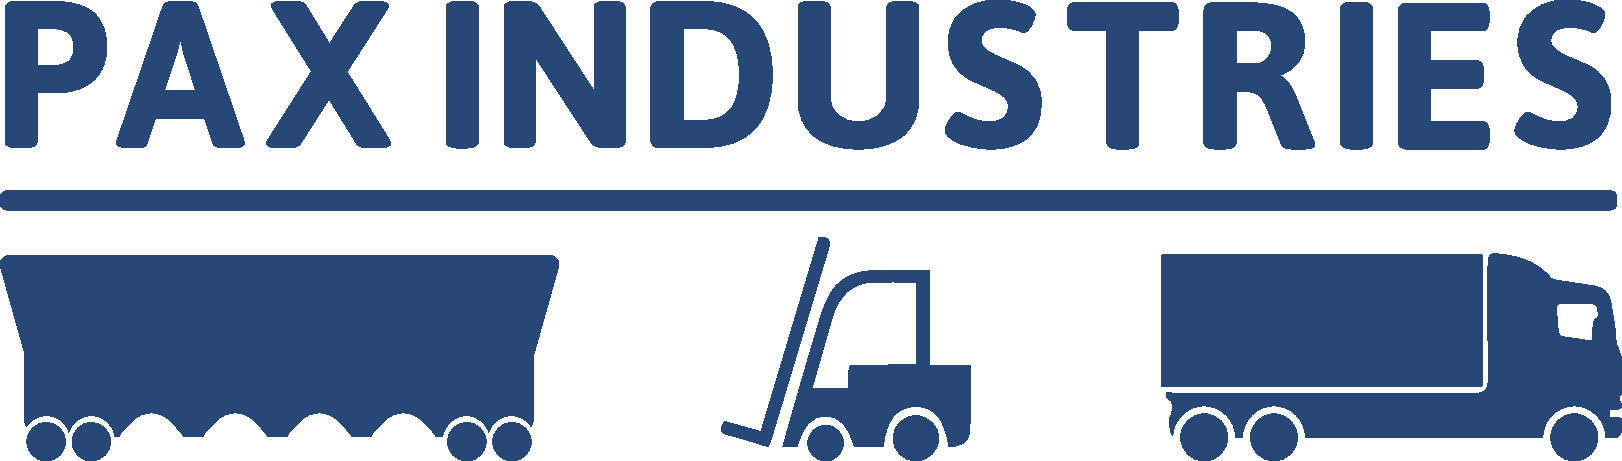 Pax Industries Logo Blue